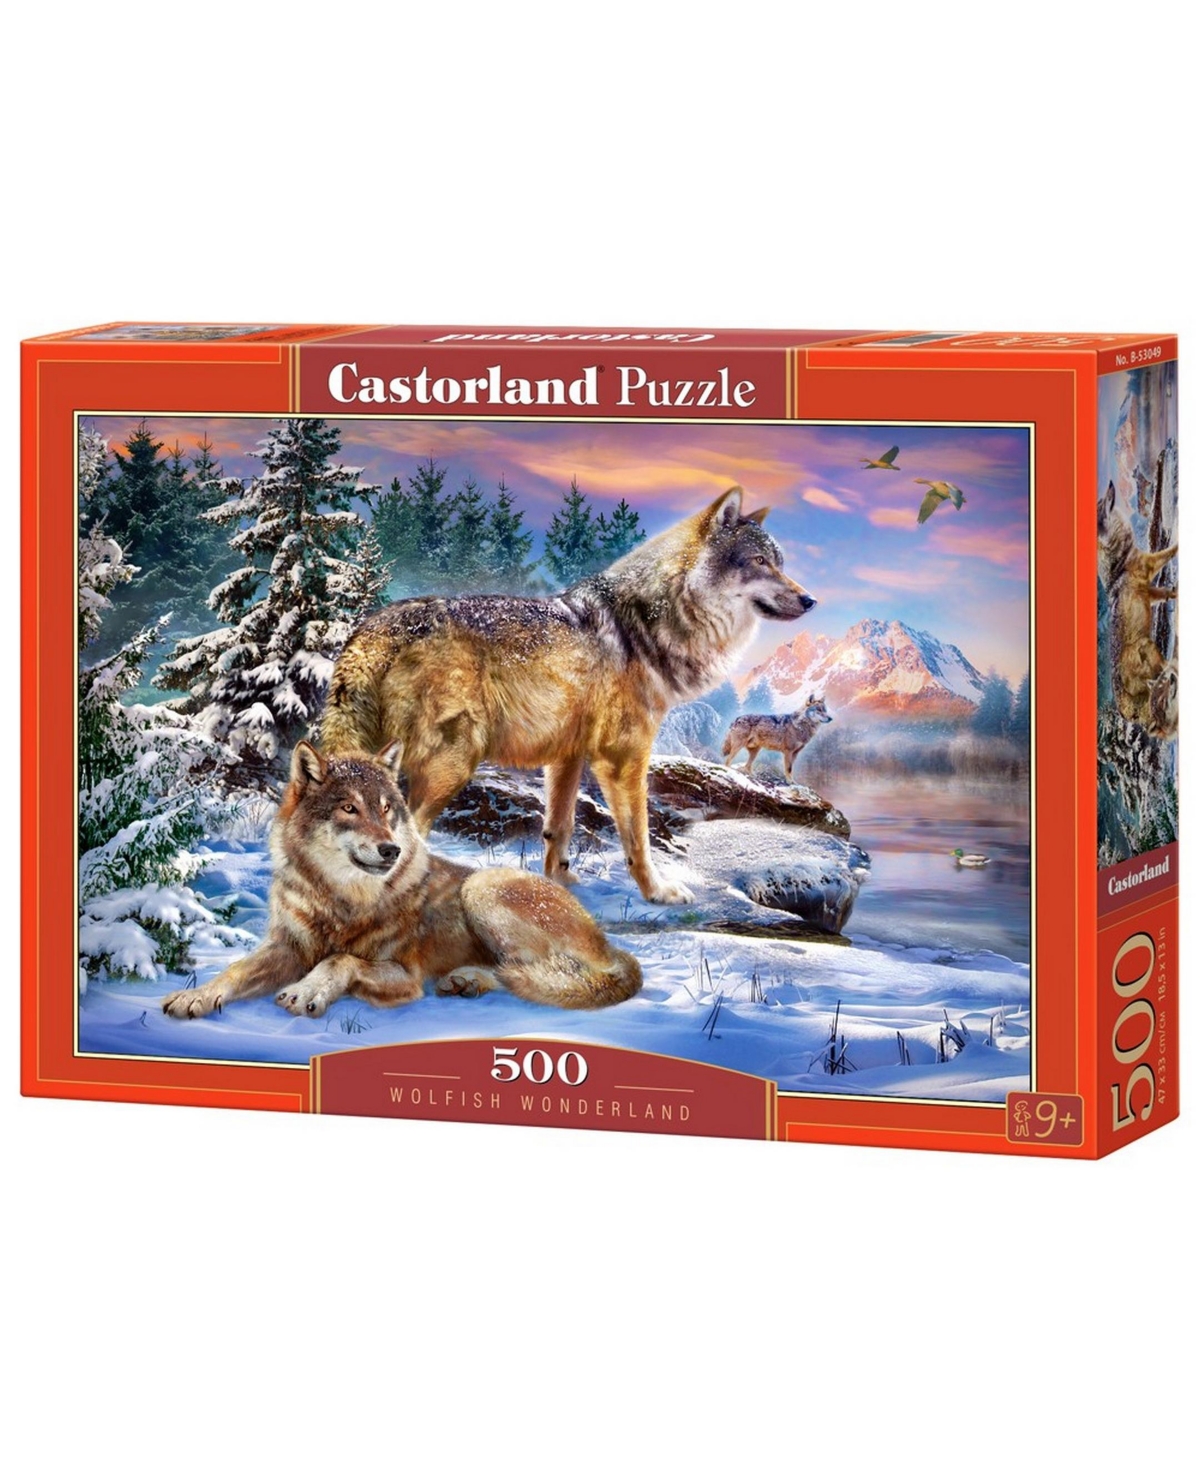 Castorland Wolfish Wonderland Jigsaw Puzzle Set, 500 Piece In Multicolor